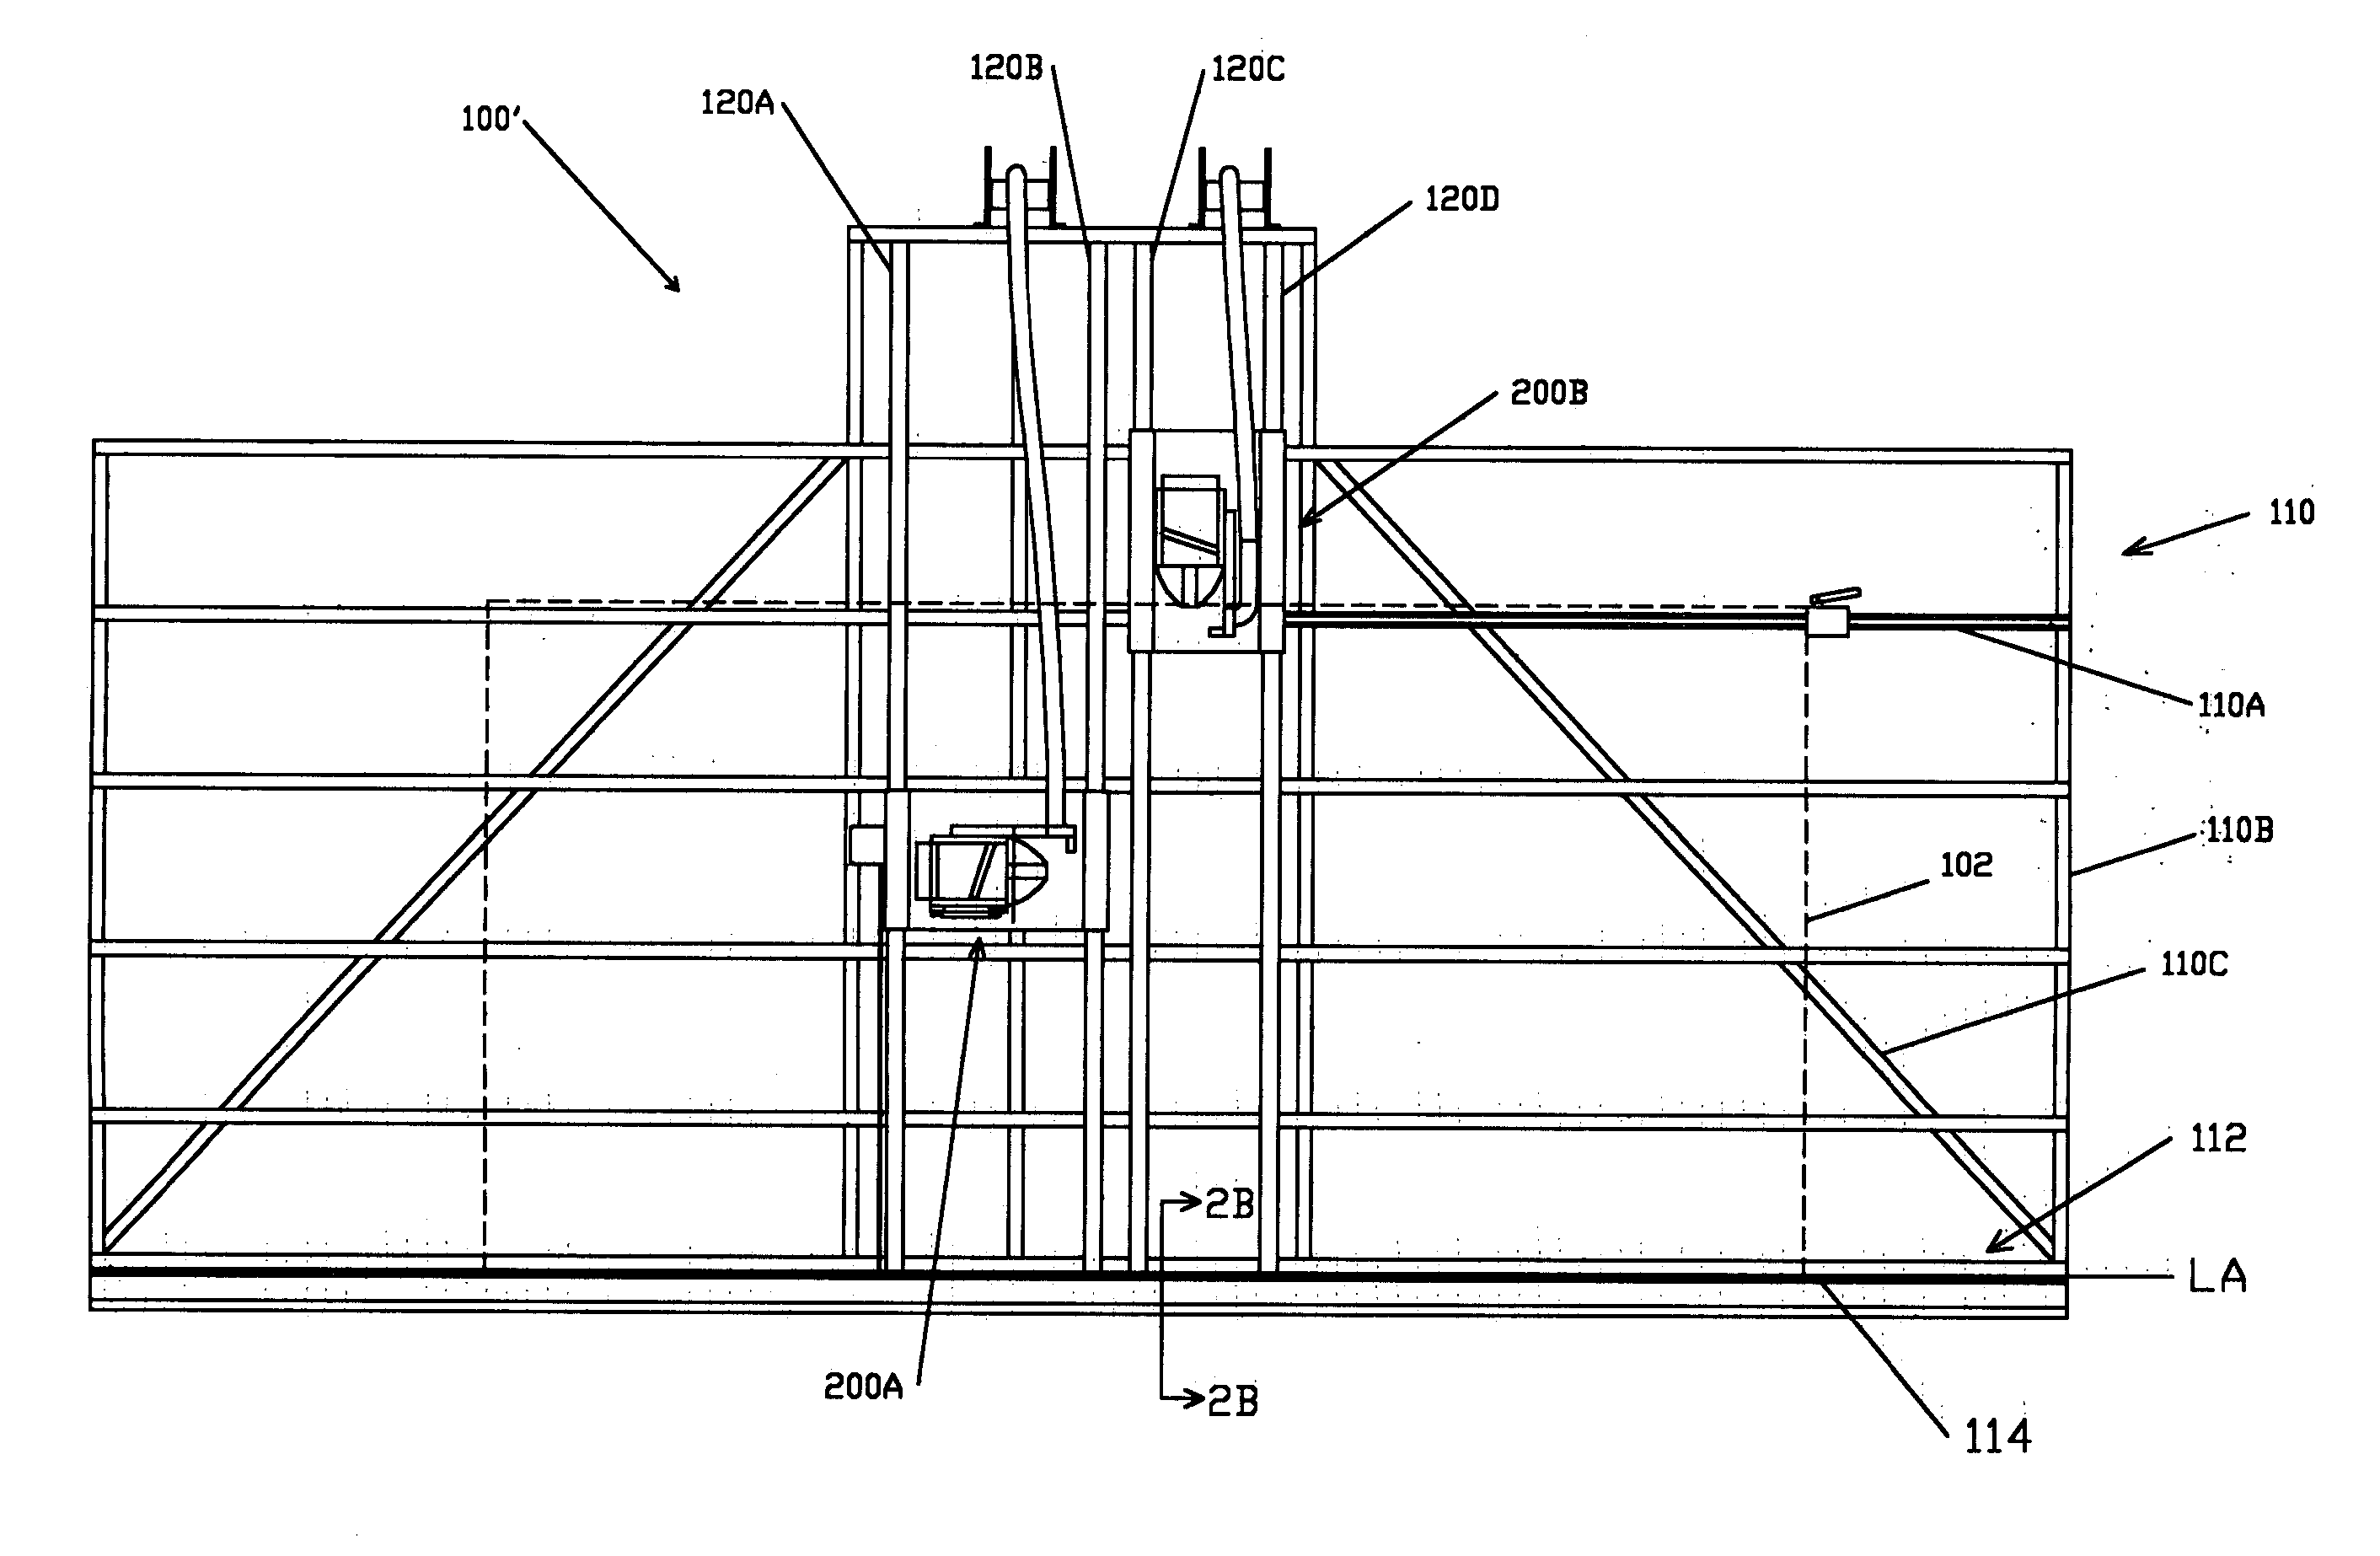 Multi-axis panel saw